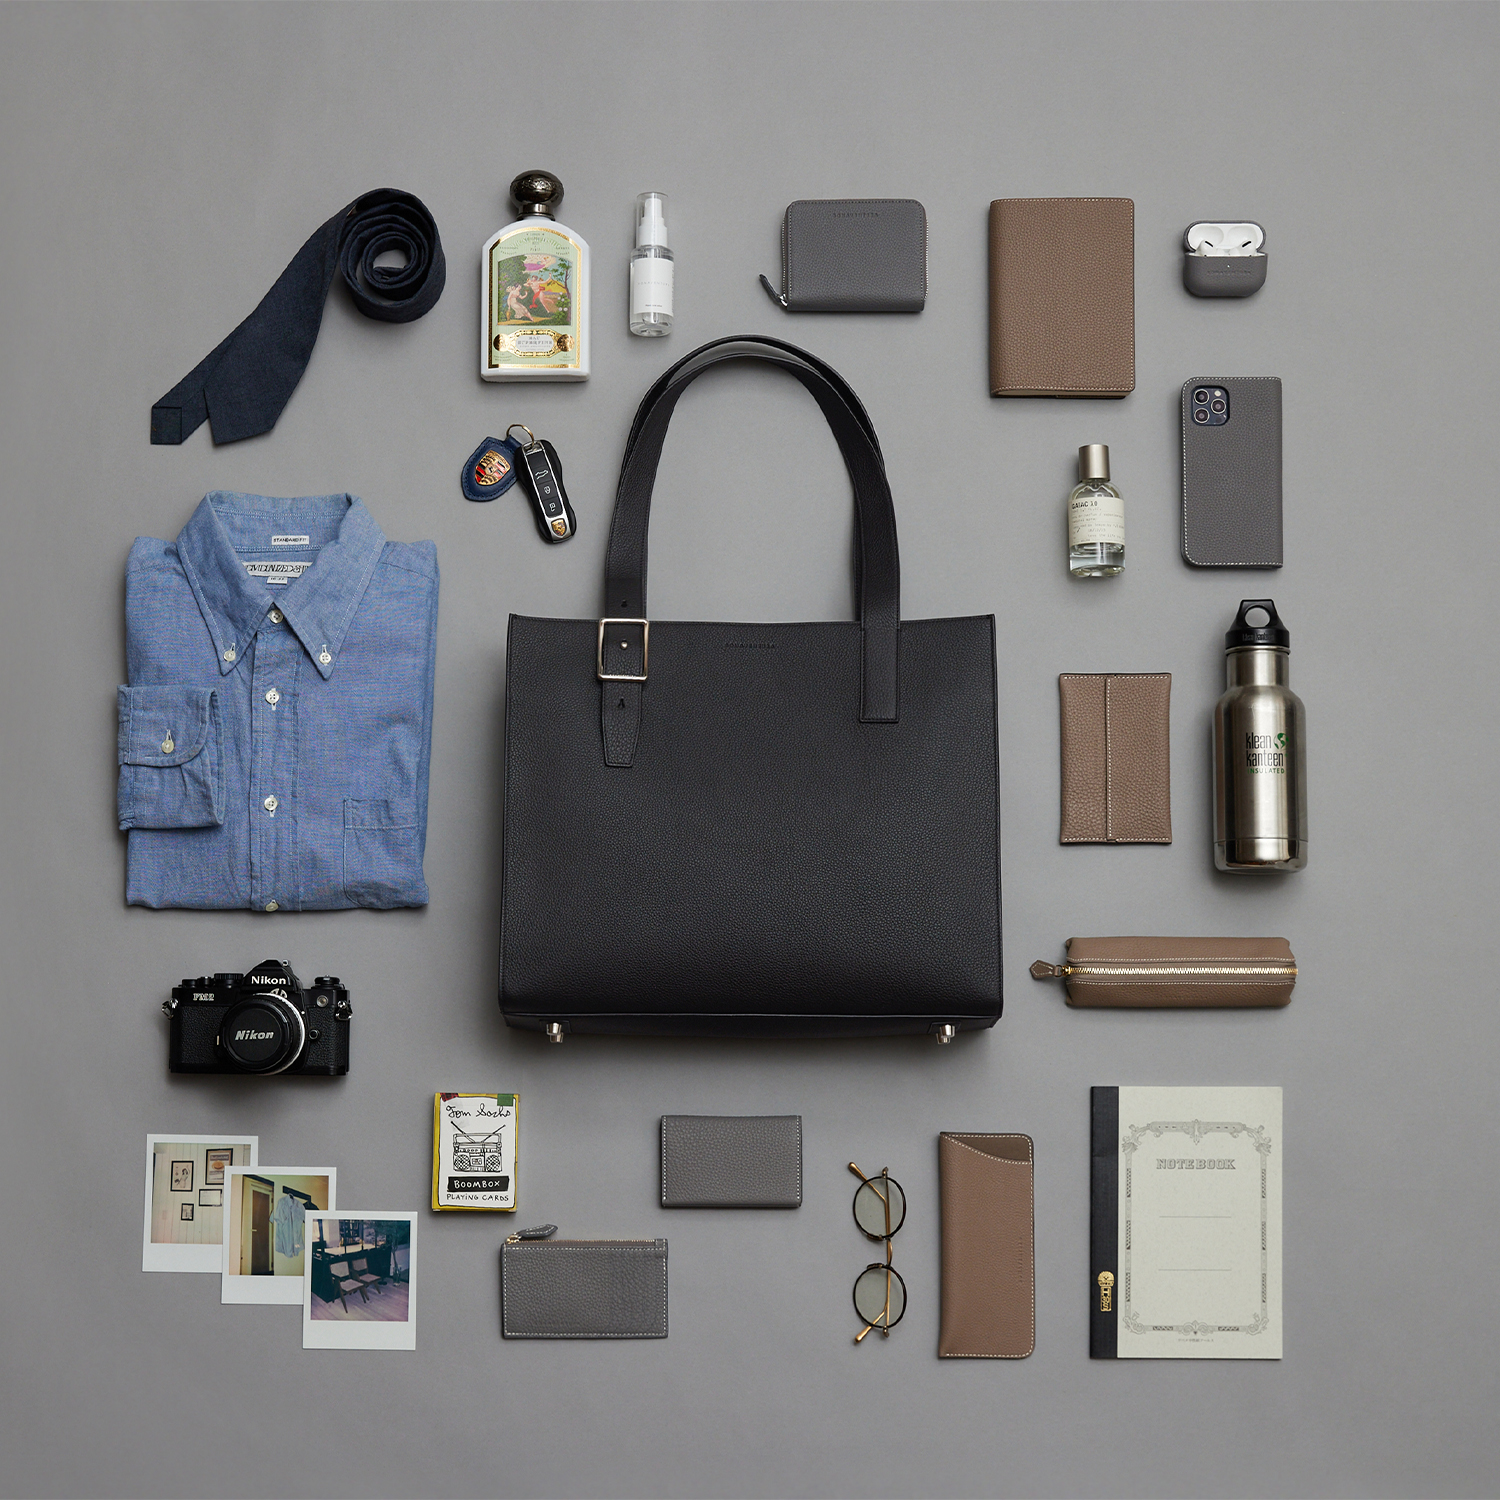 A large BONAVENTURA handbag that offers plenty of space for travel essentials.